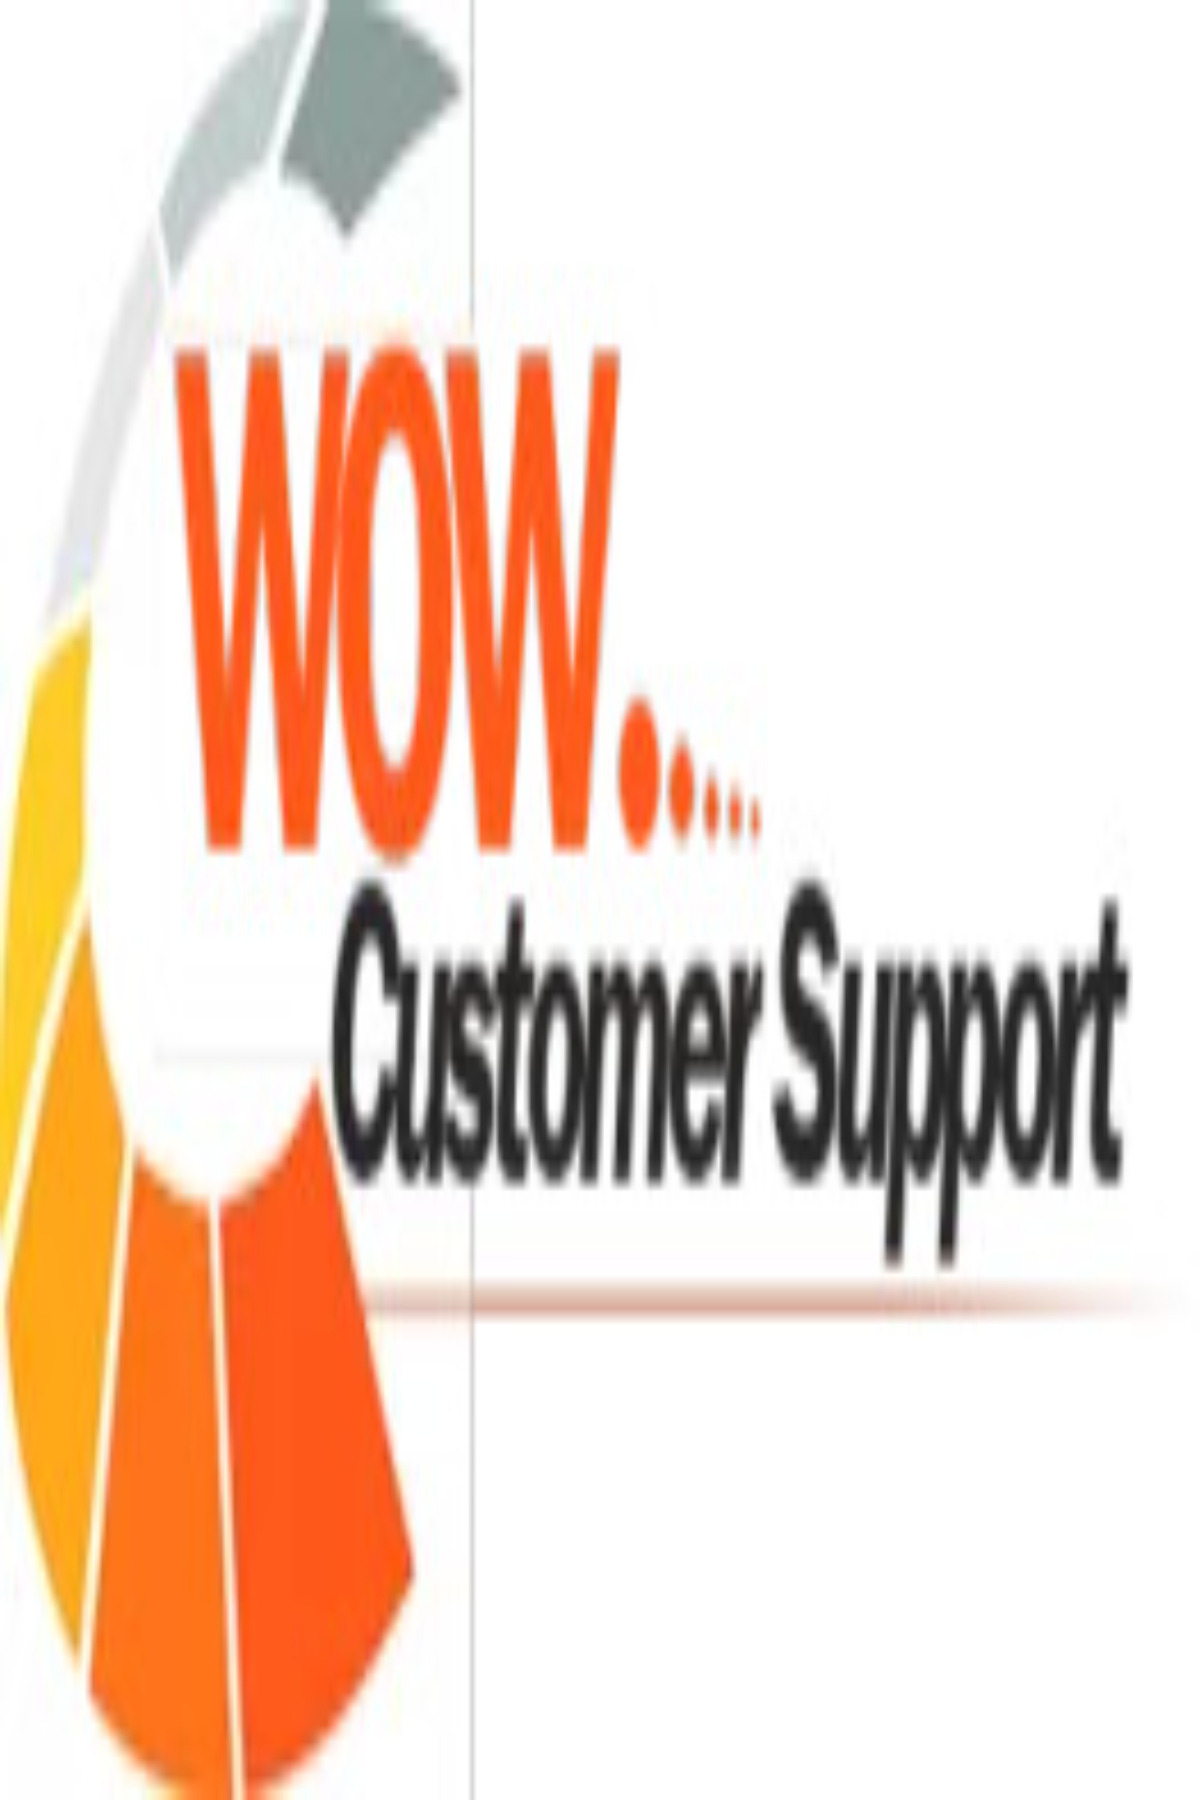 Company logo of wowcustomer support